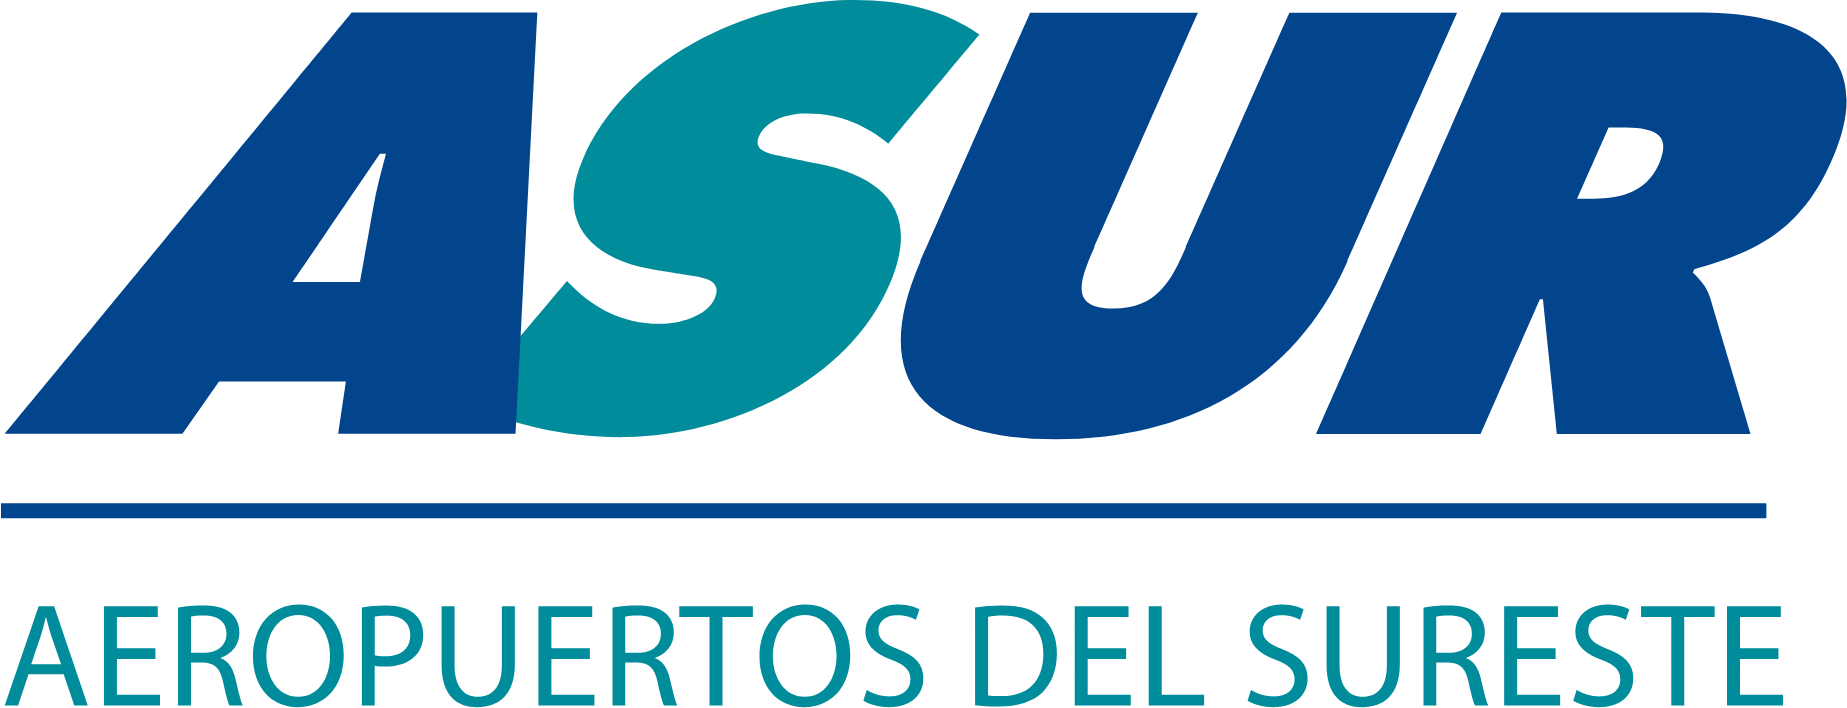 Grupo Aeroportuario del Sureste
 logo large (transparent PNG)